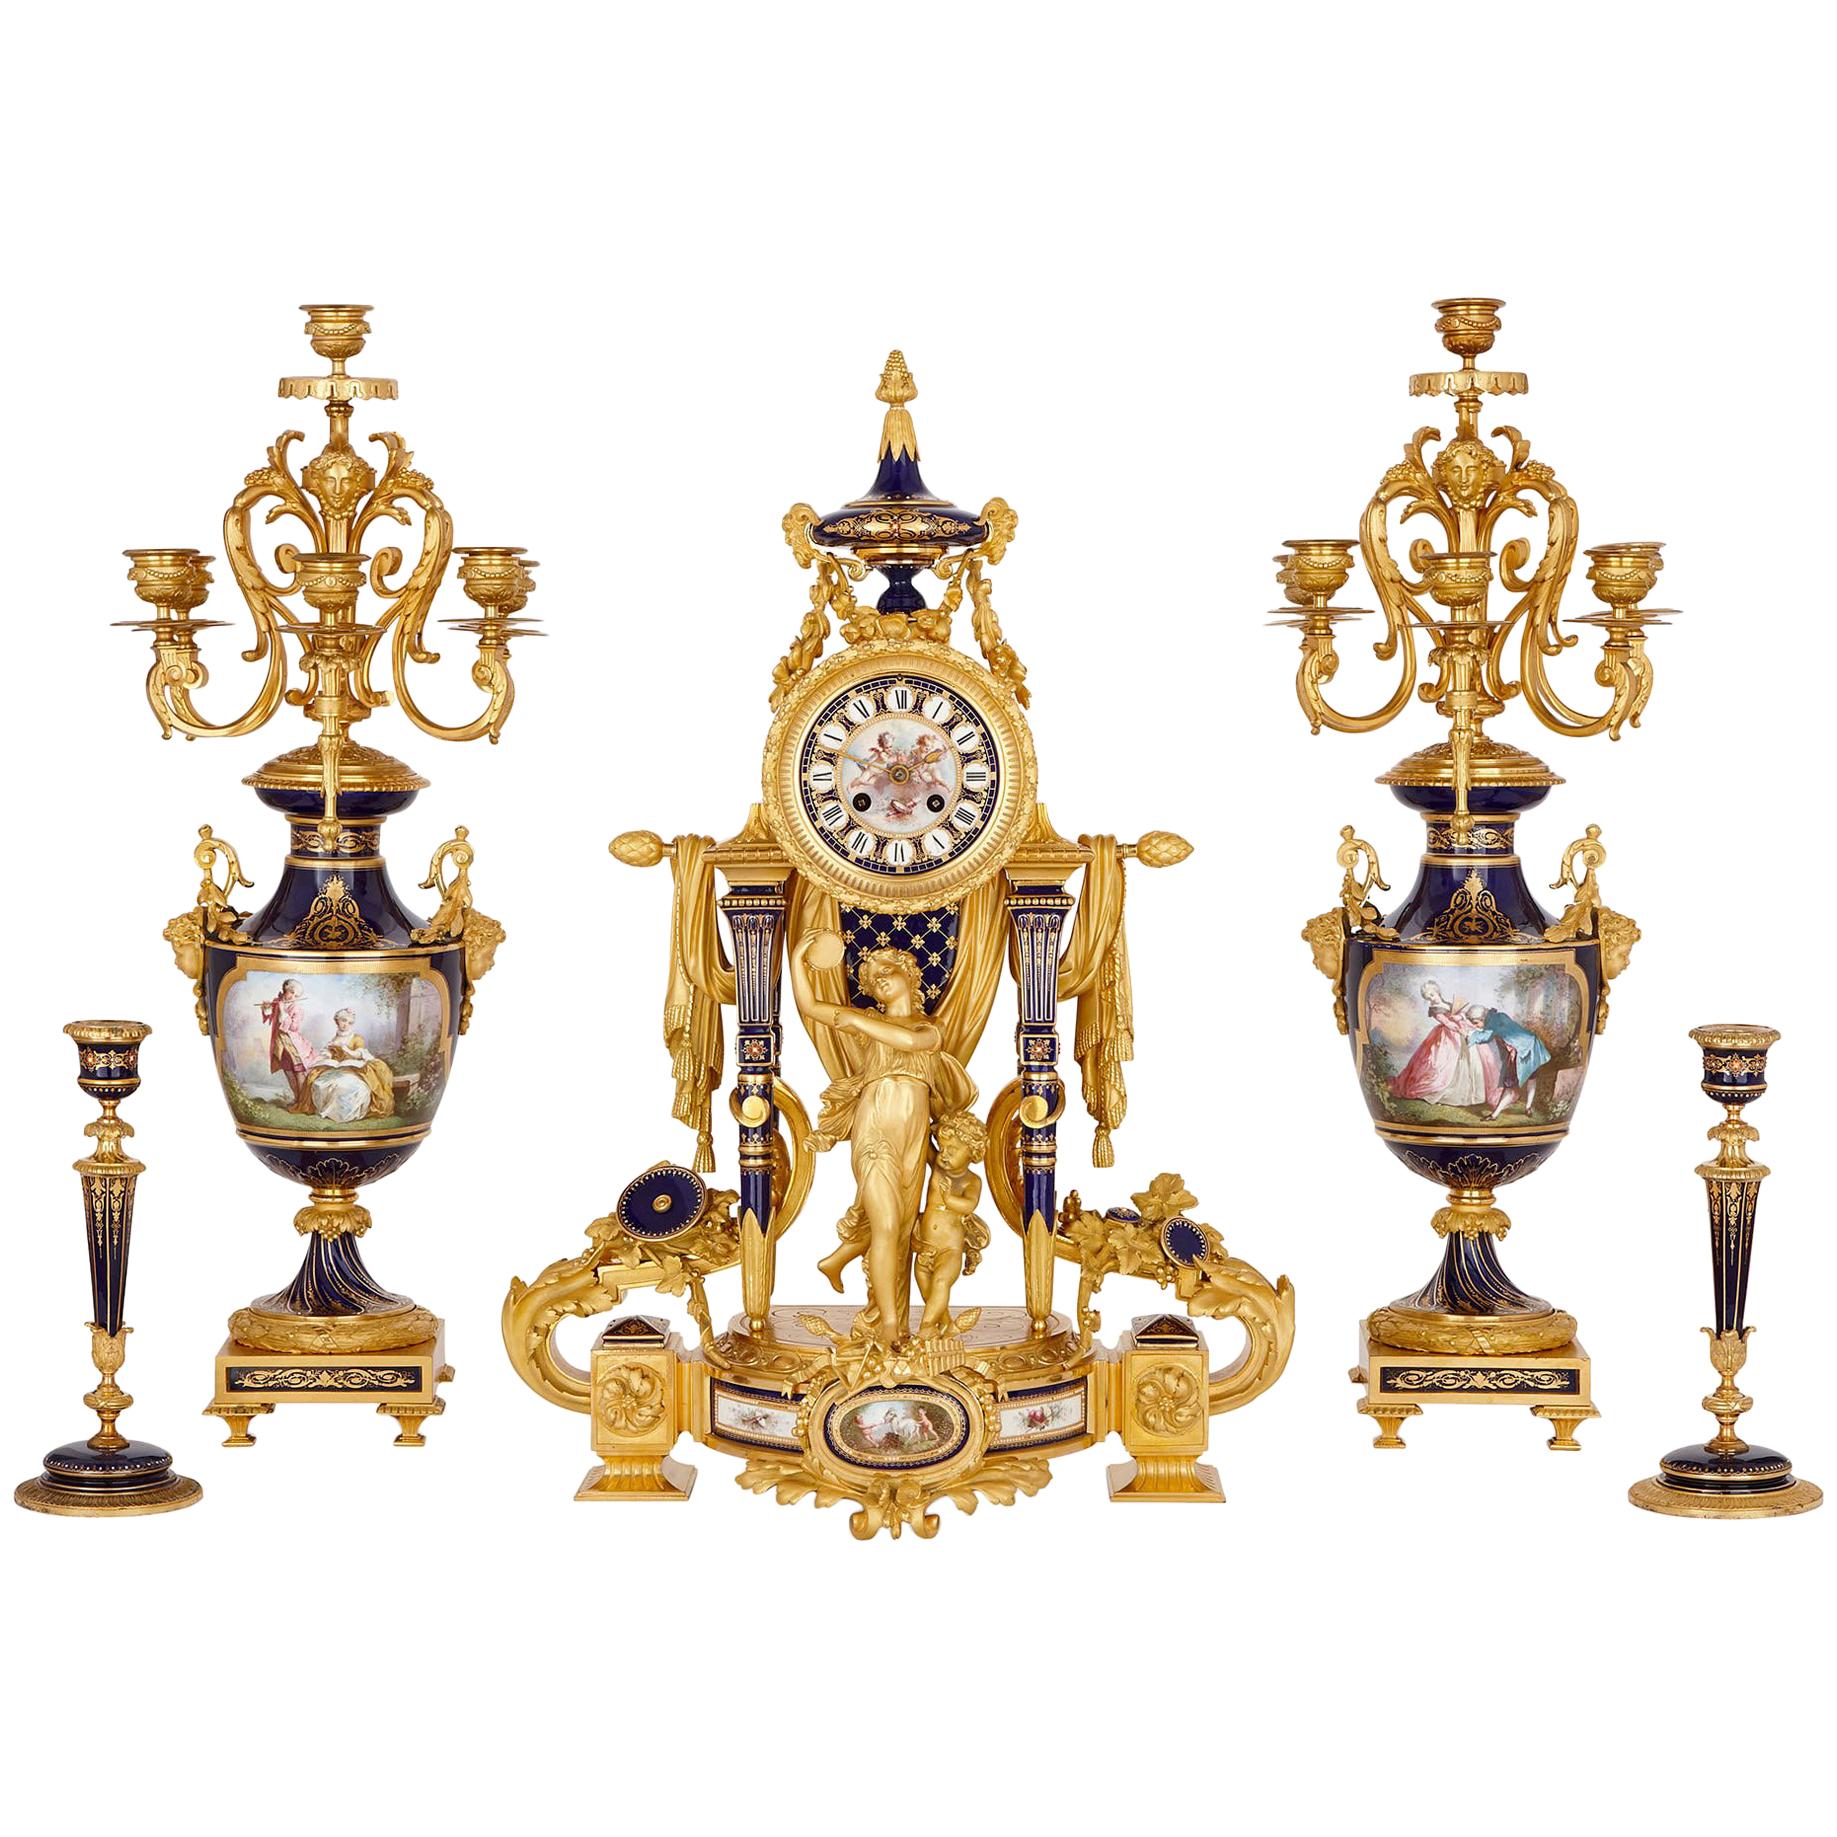 Sèvres Style Gilt Bronze Mounted Porcelain Clock Set